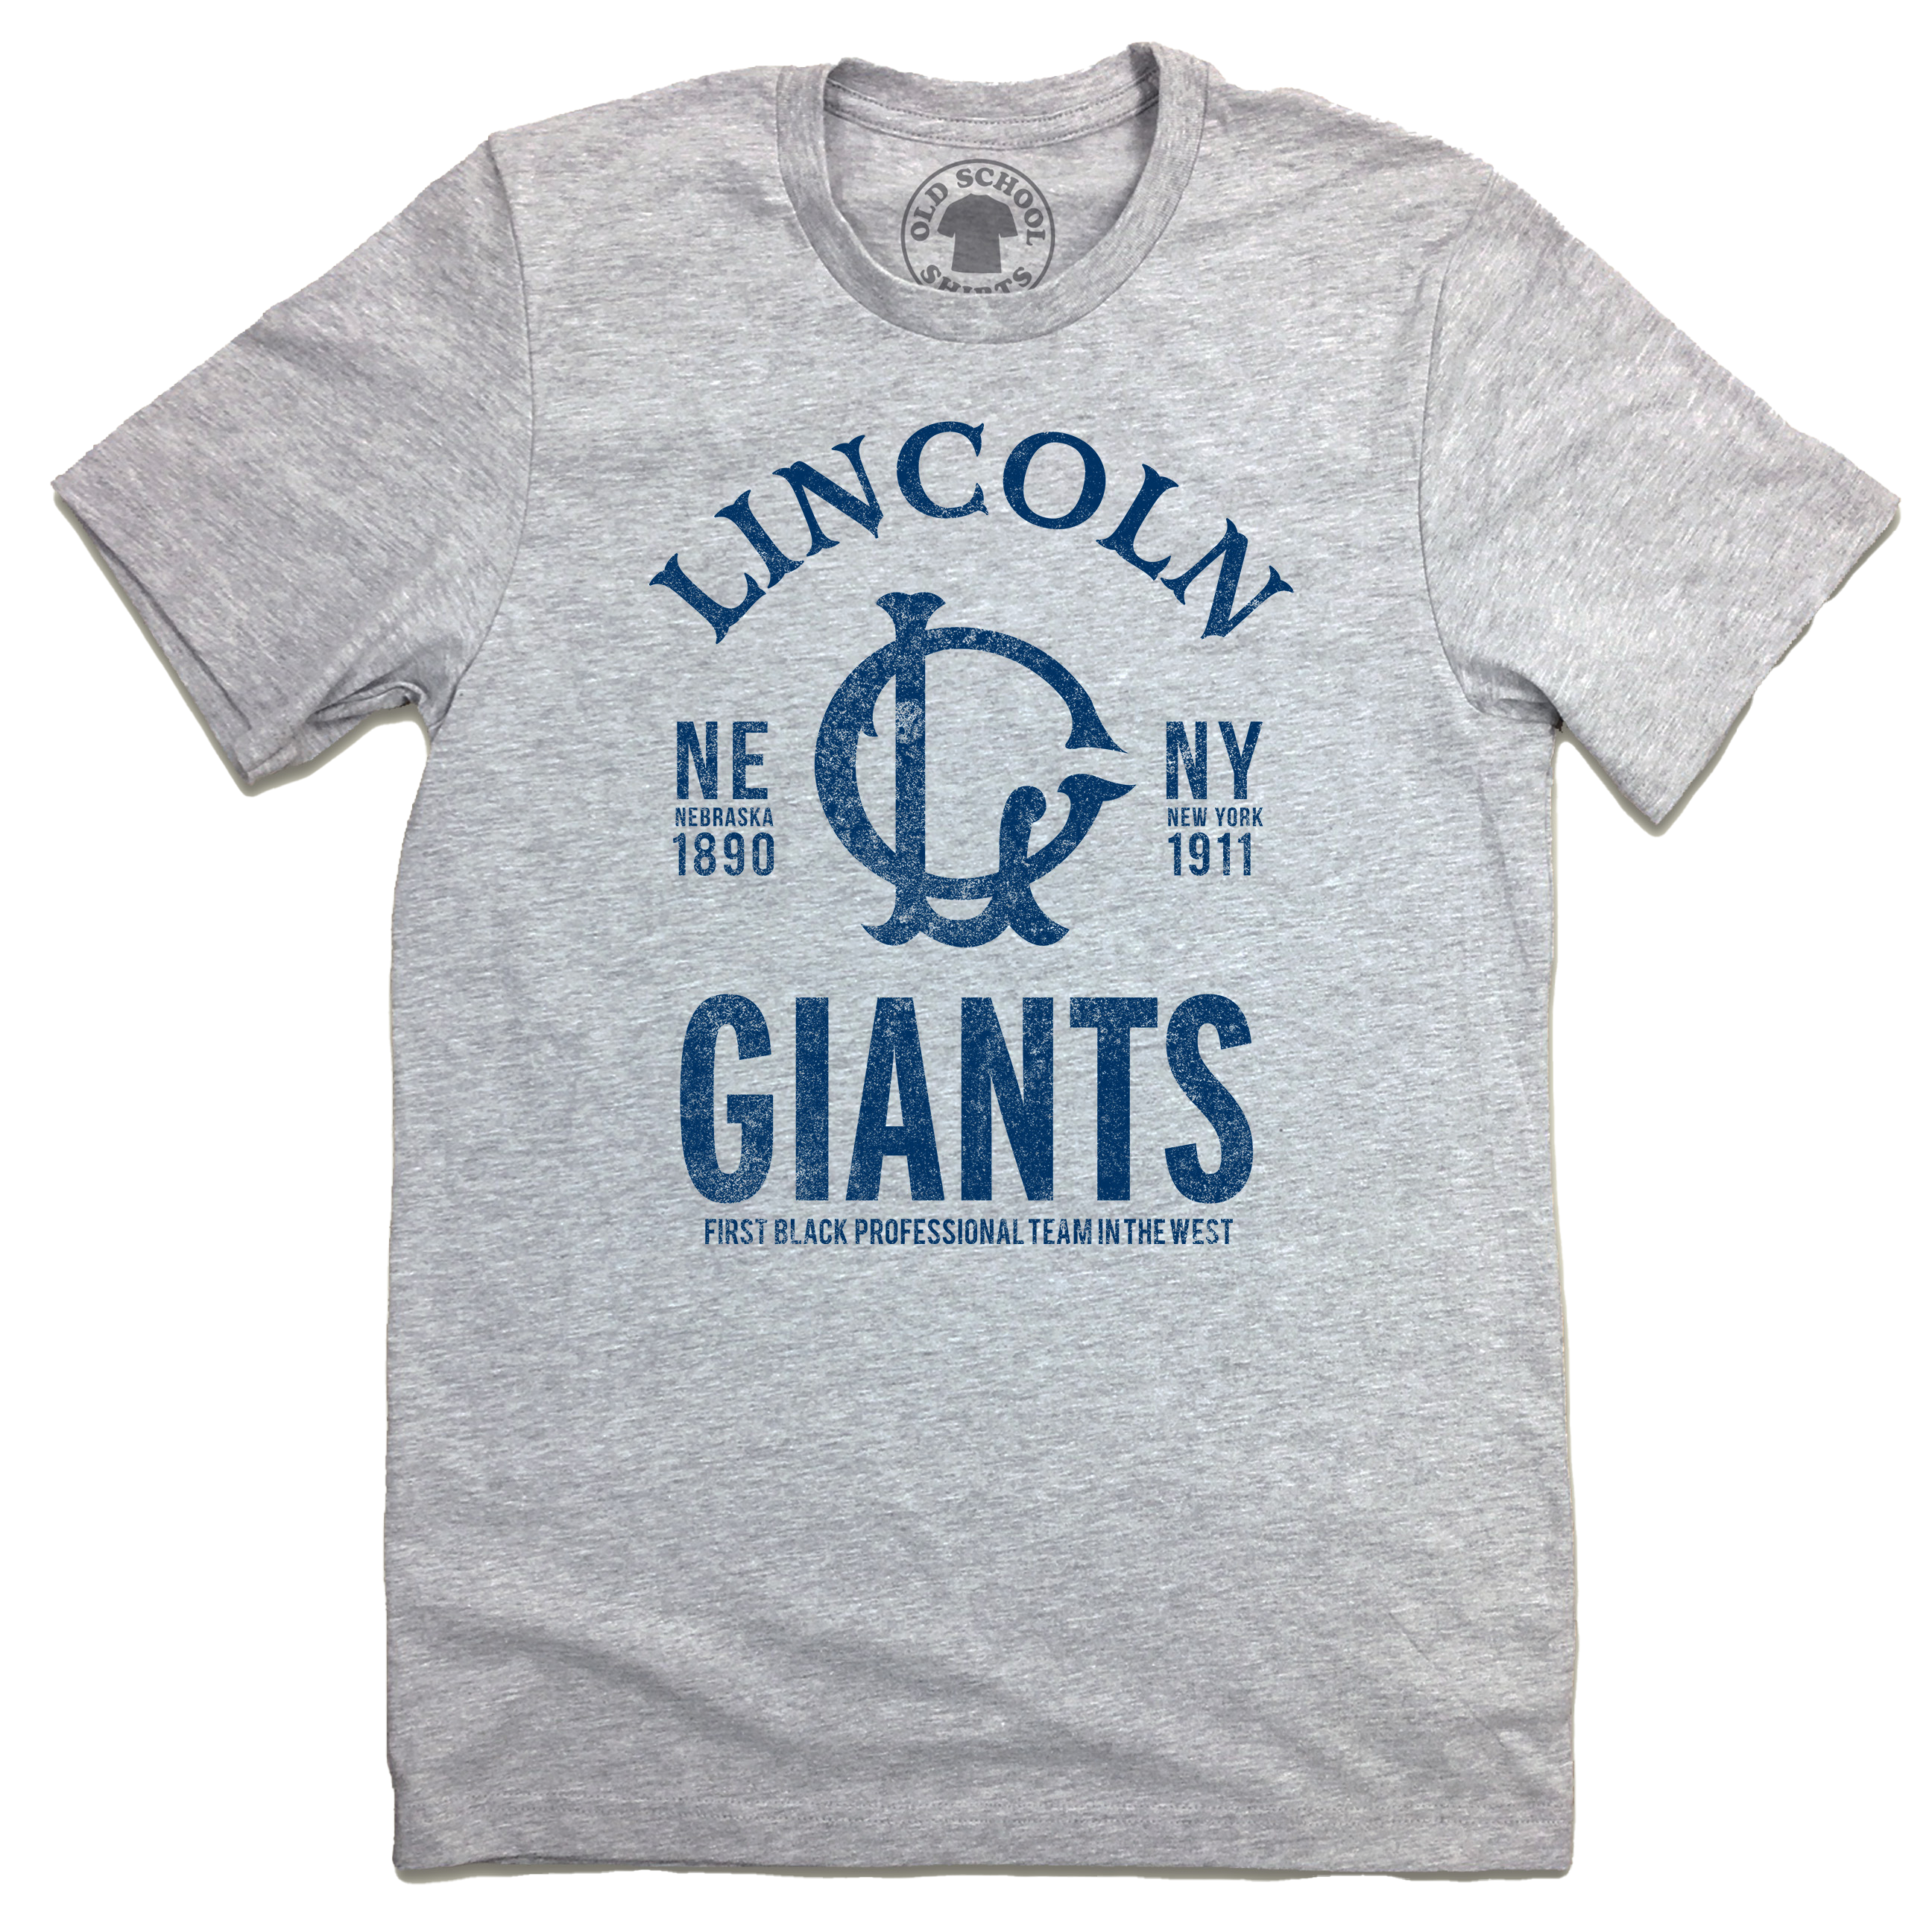 Lincoln Giants Tee | Negro League Baseball Apparel | Old School Shirts